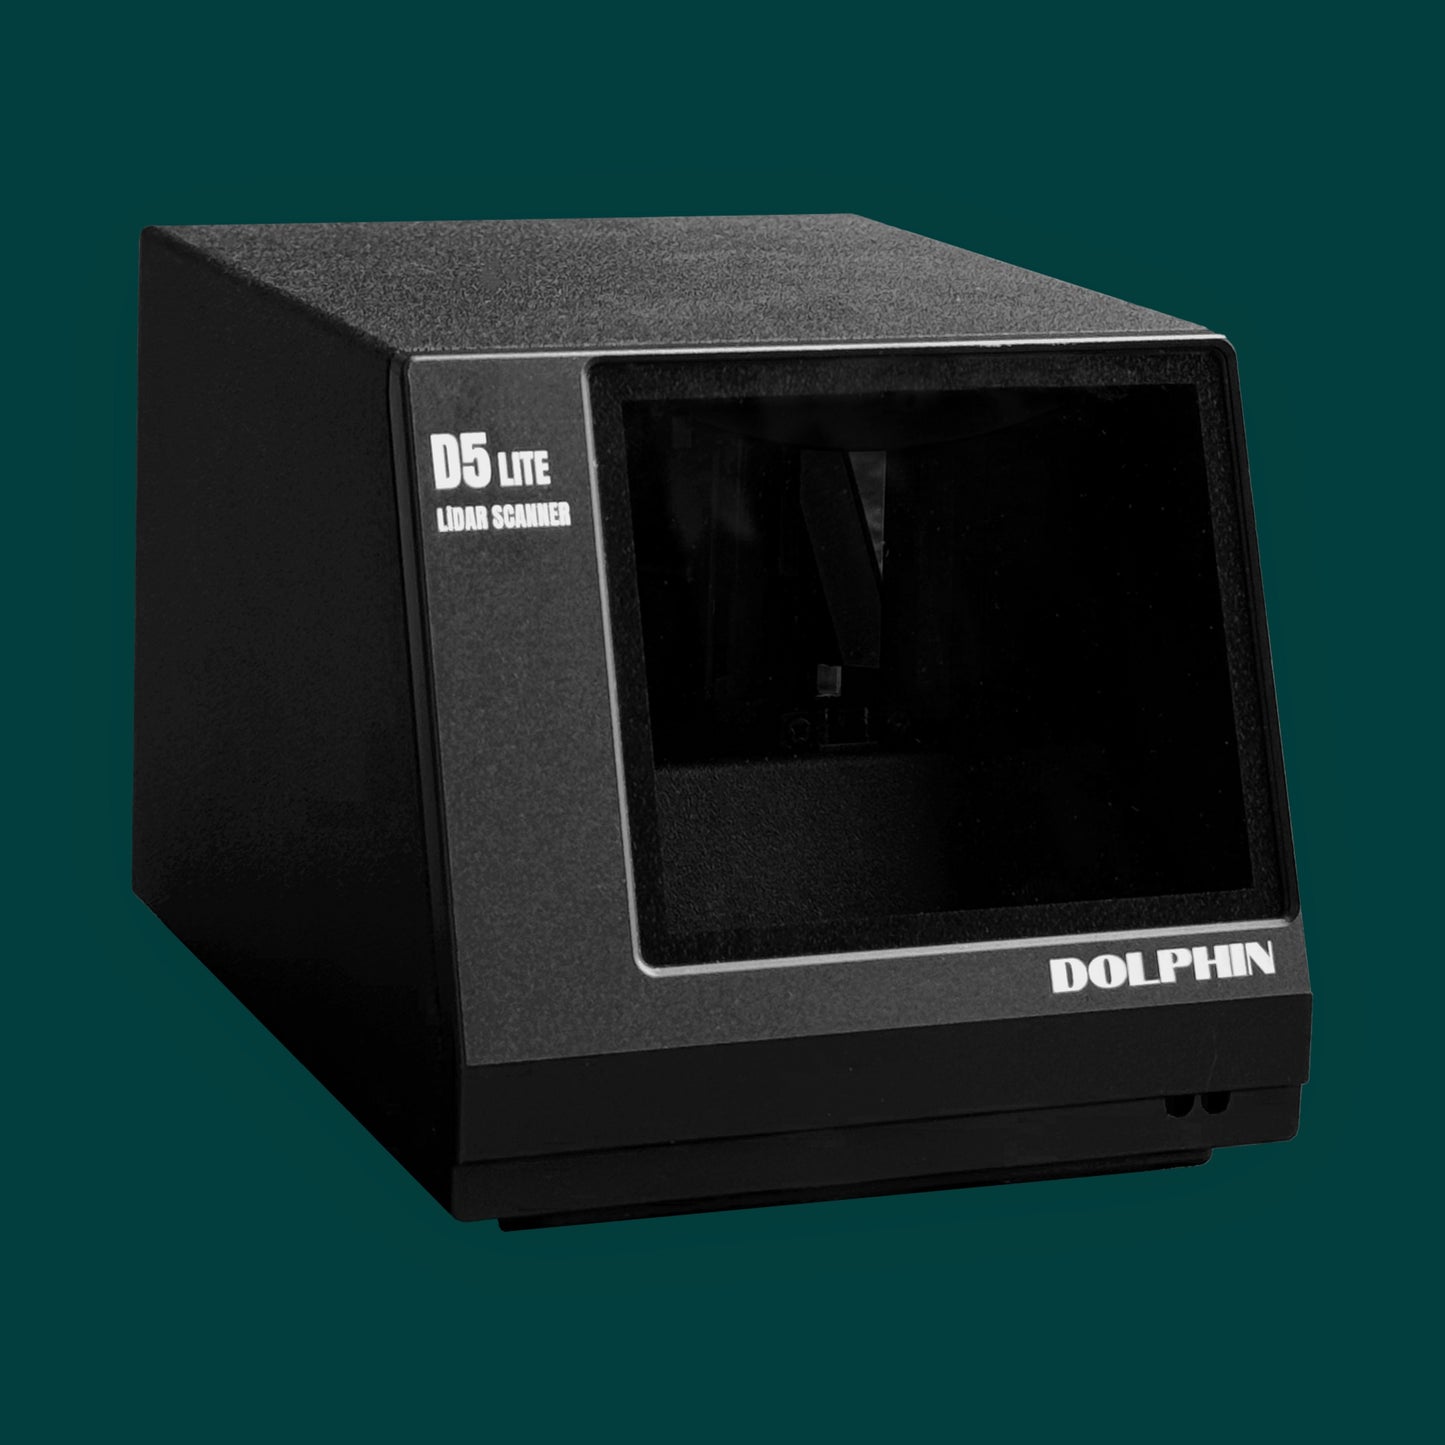 Dolphin D5 lite, a 3D-LiDAR scanner with 76m depth range